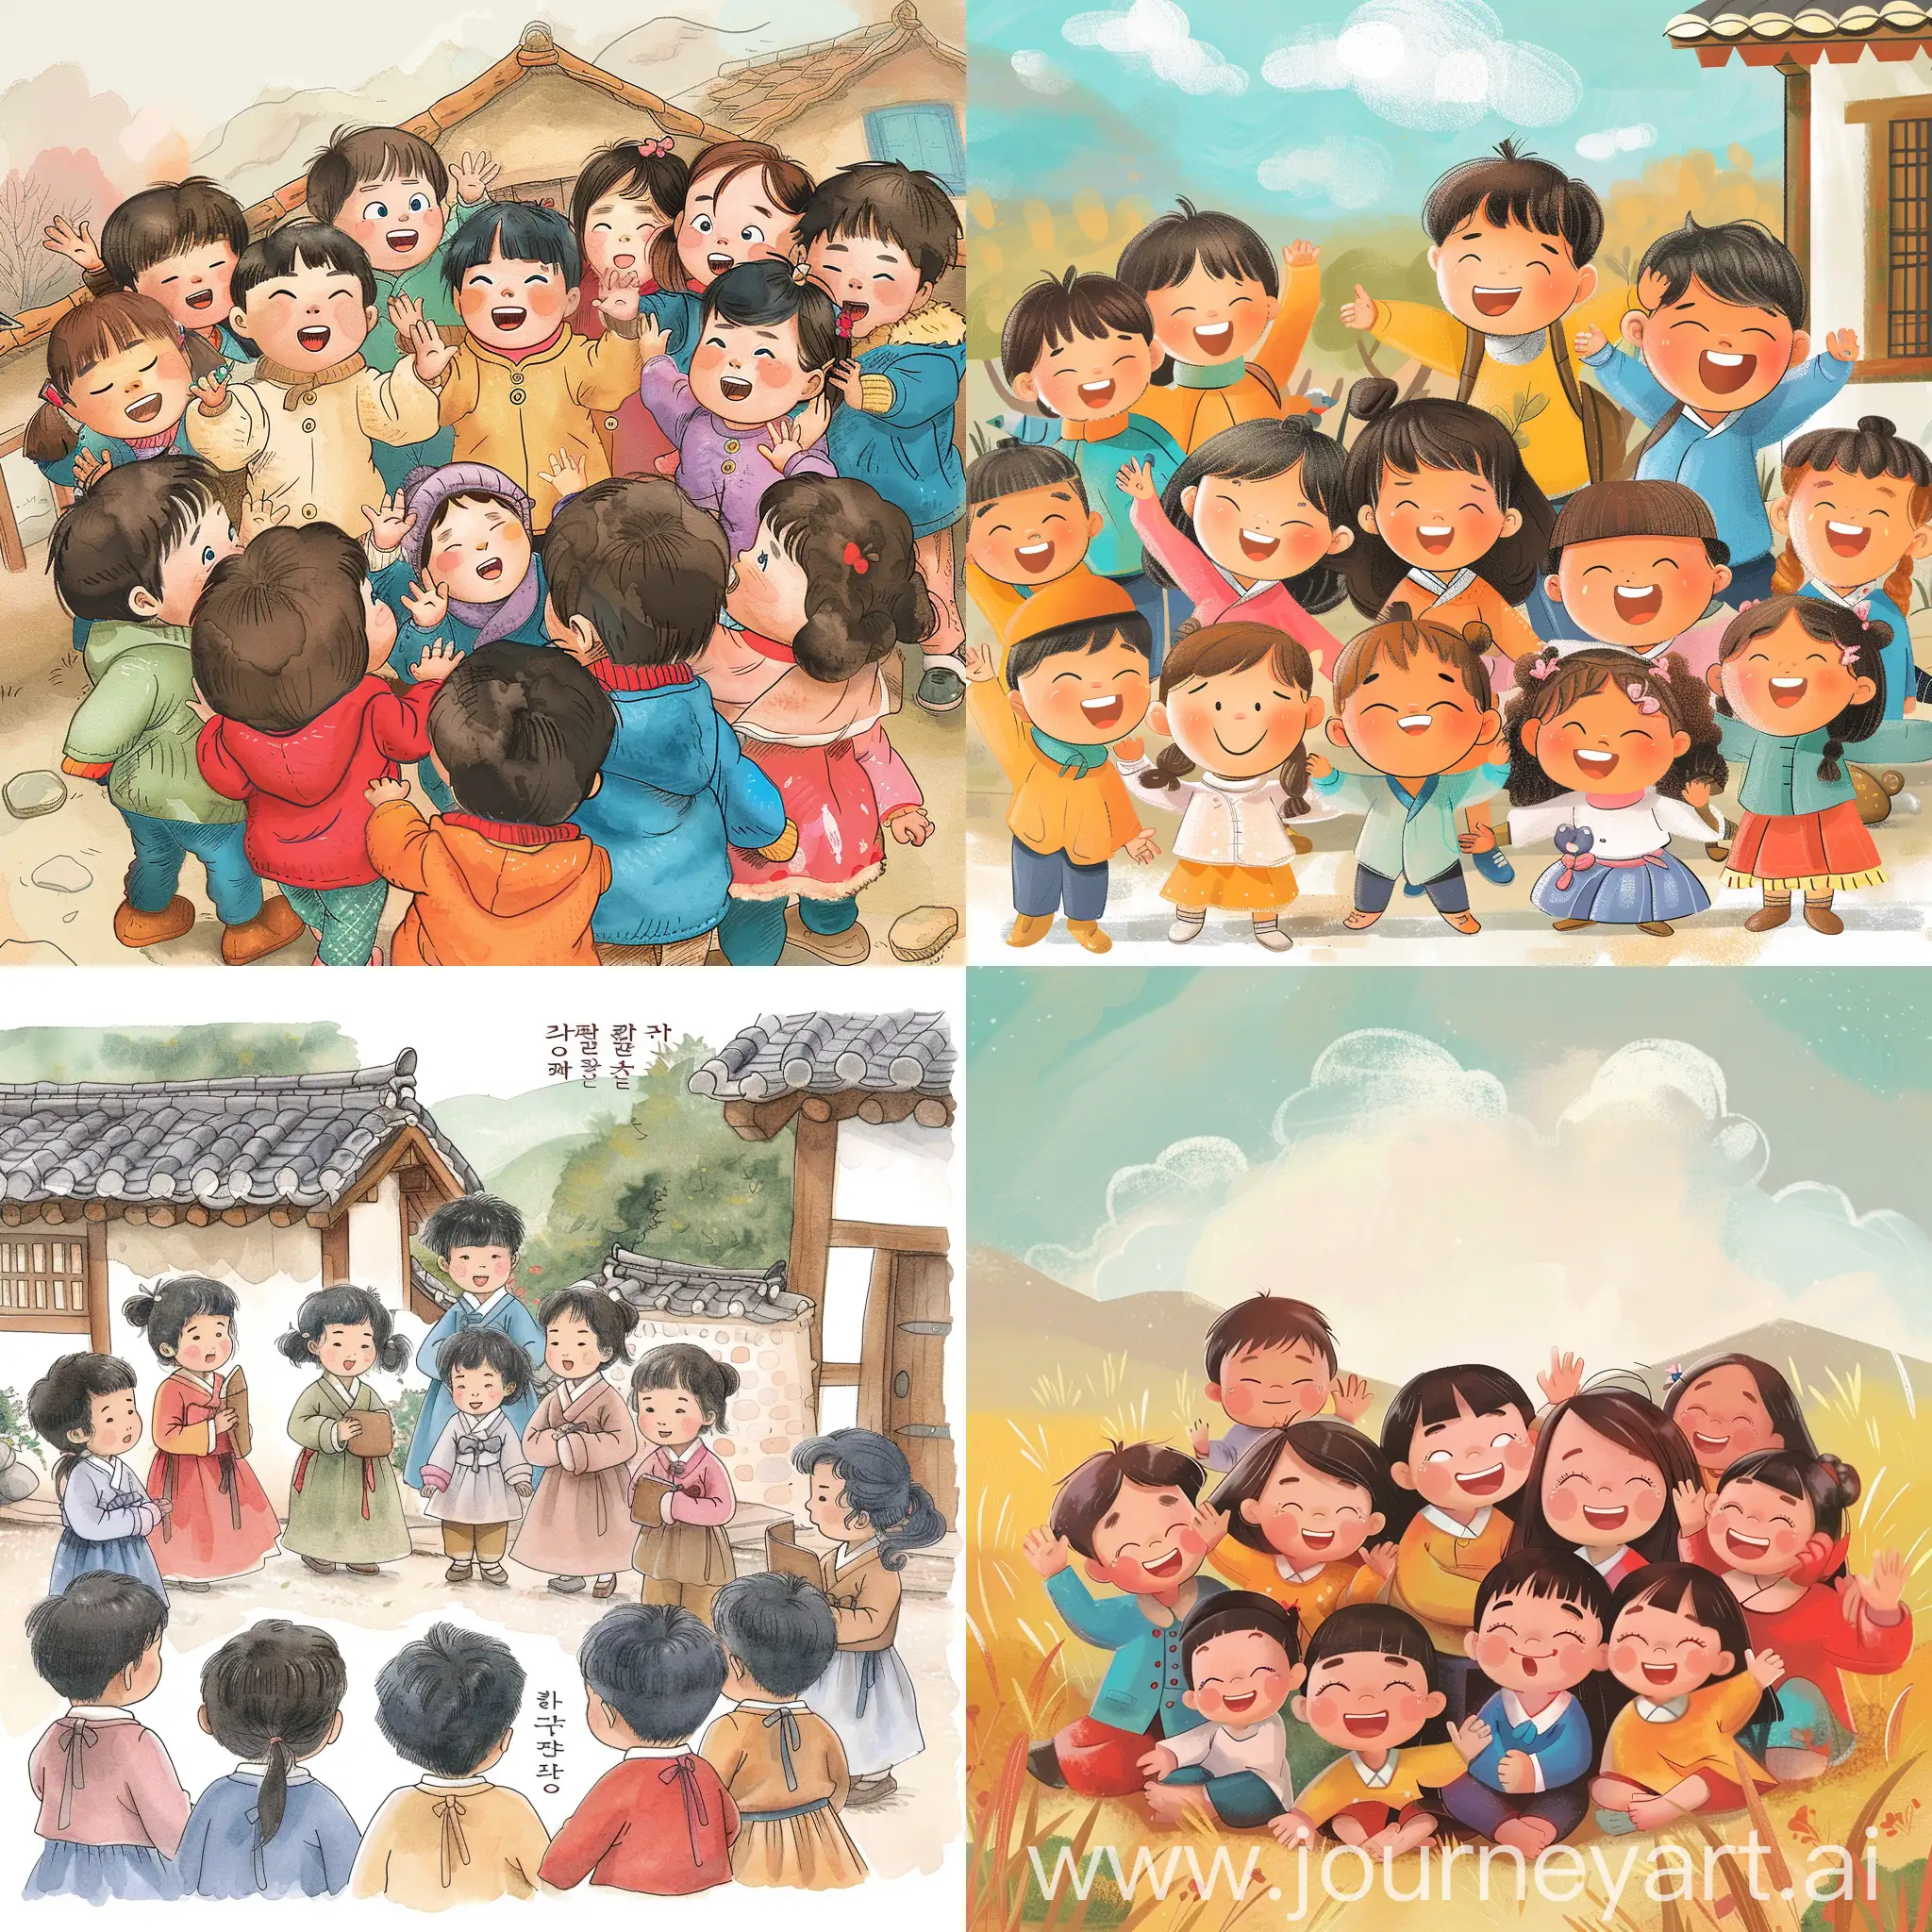 Korean-Childrens-Storybook-Illustration-Joyful-Gathering-of-Young-Friends